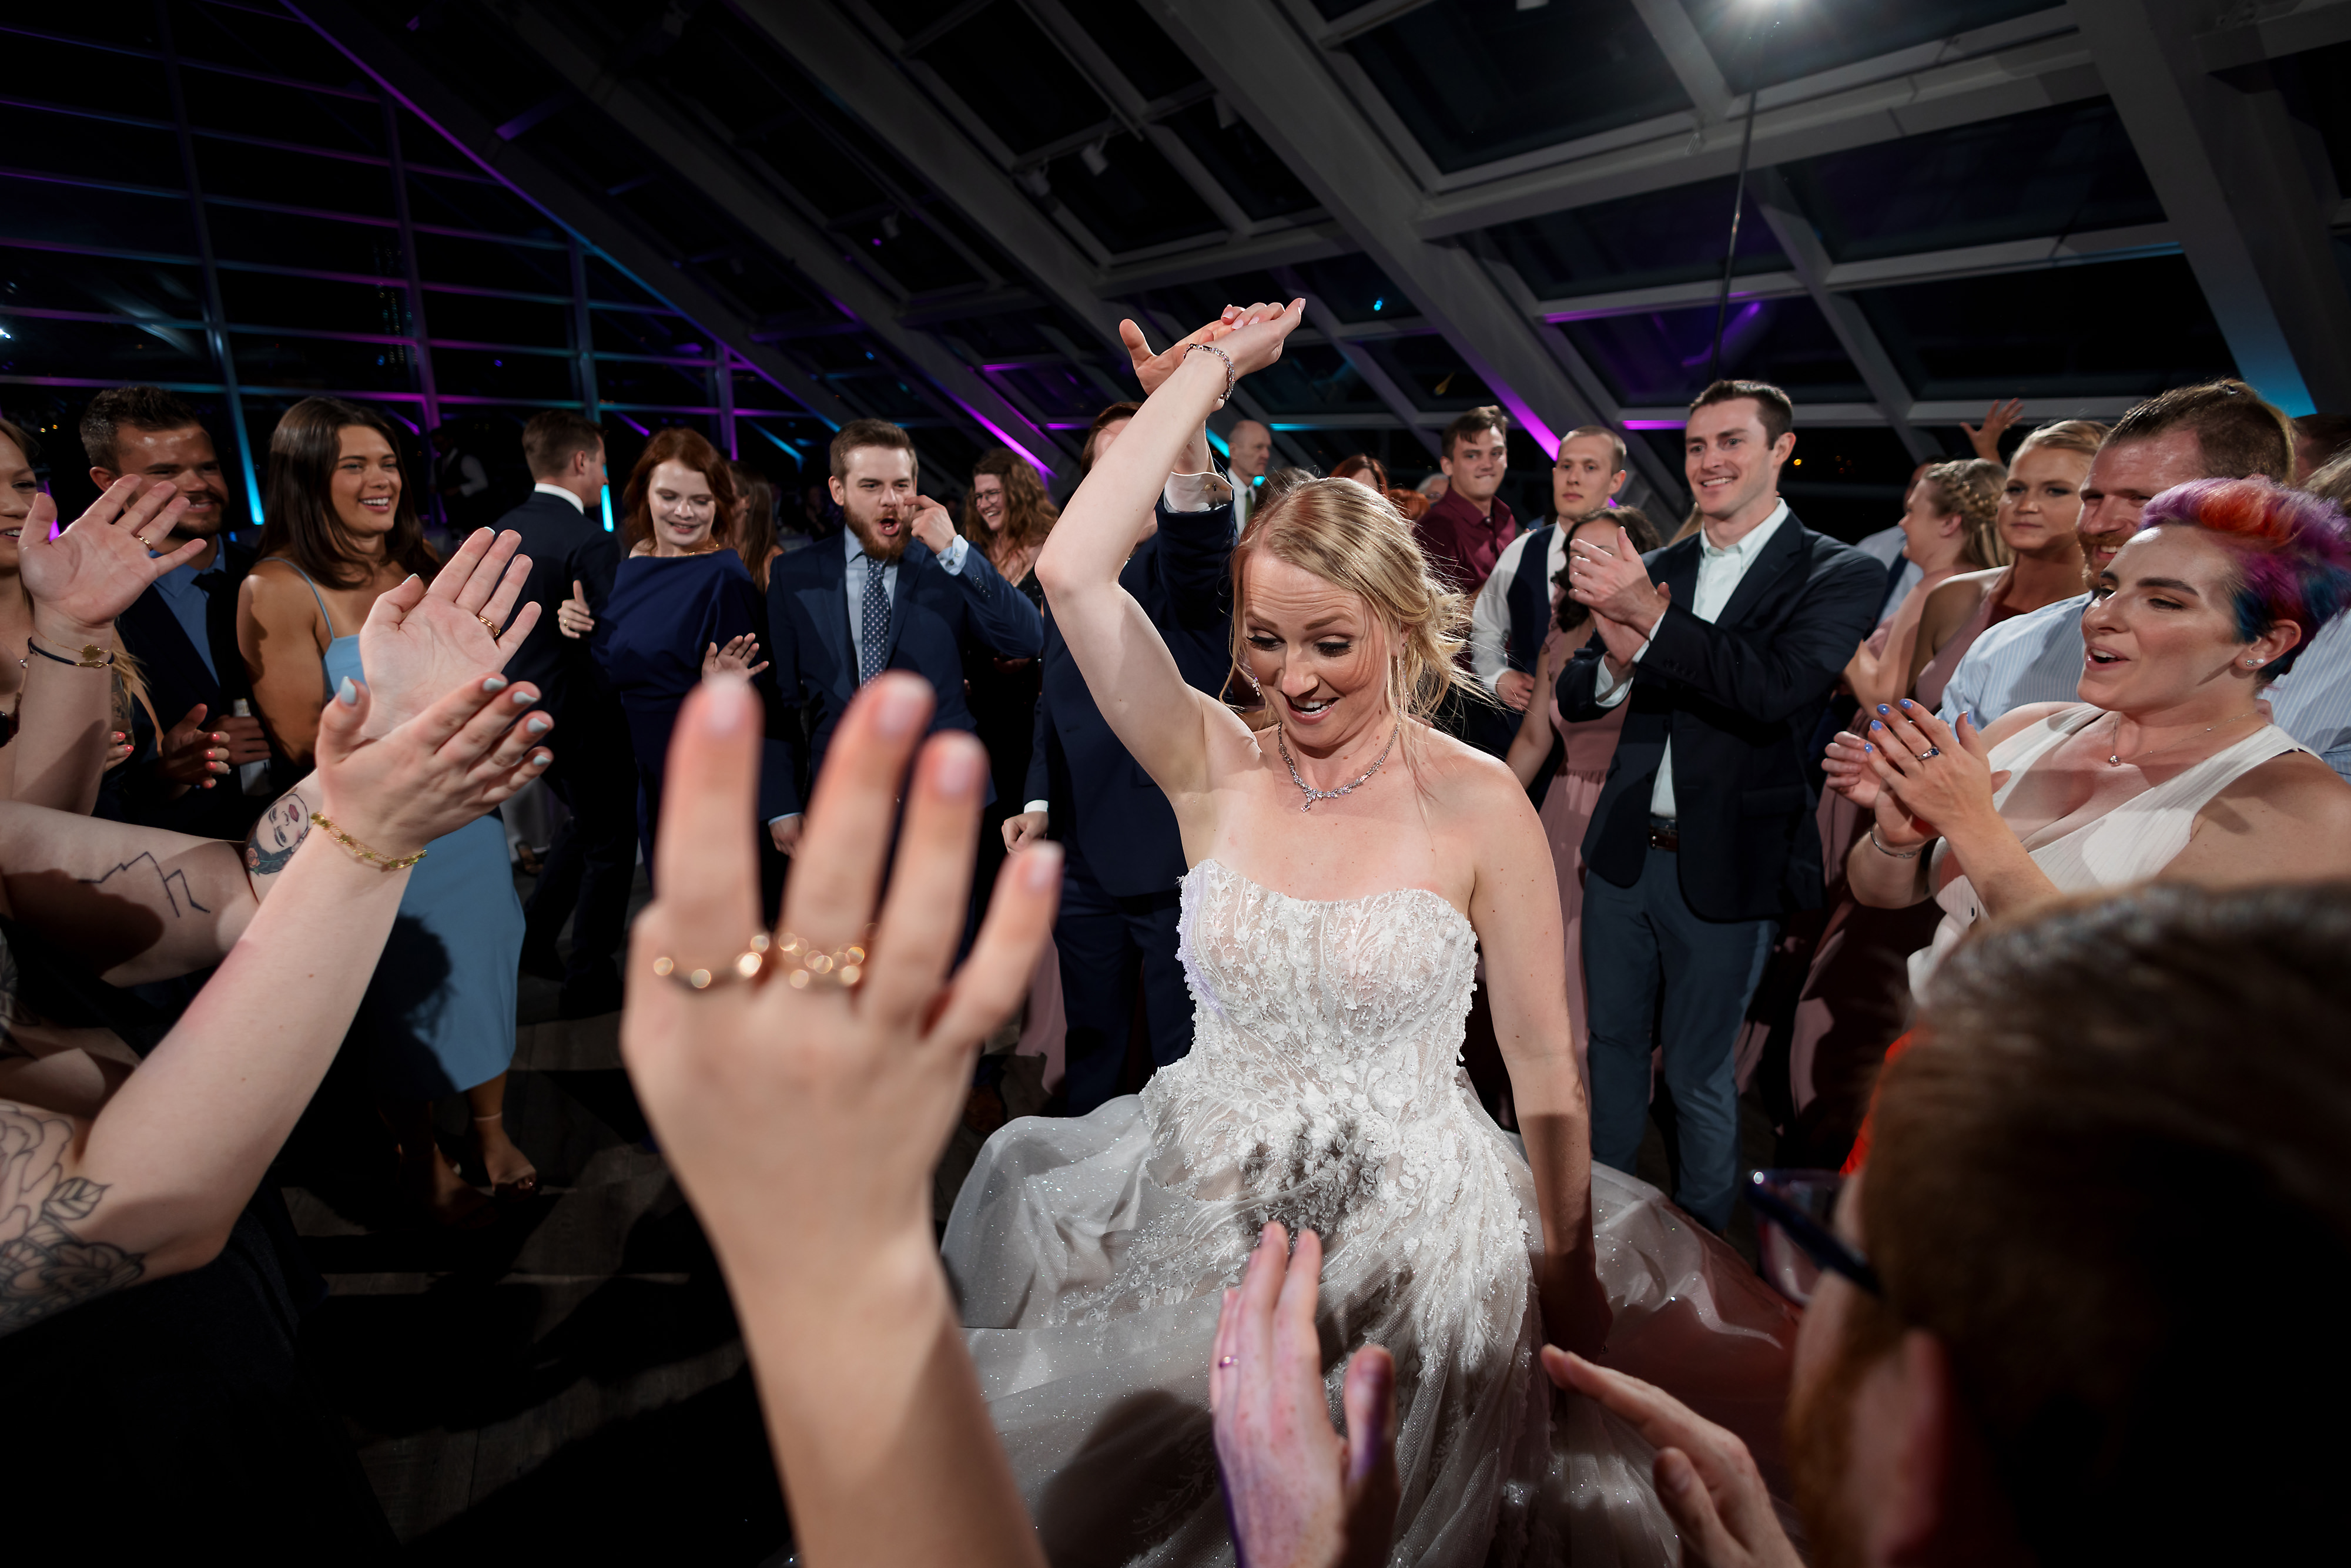 wedding guests dance during wedding reception at Adler Planetarium in Chicago